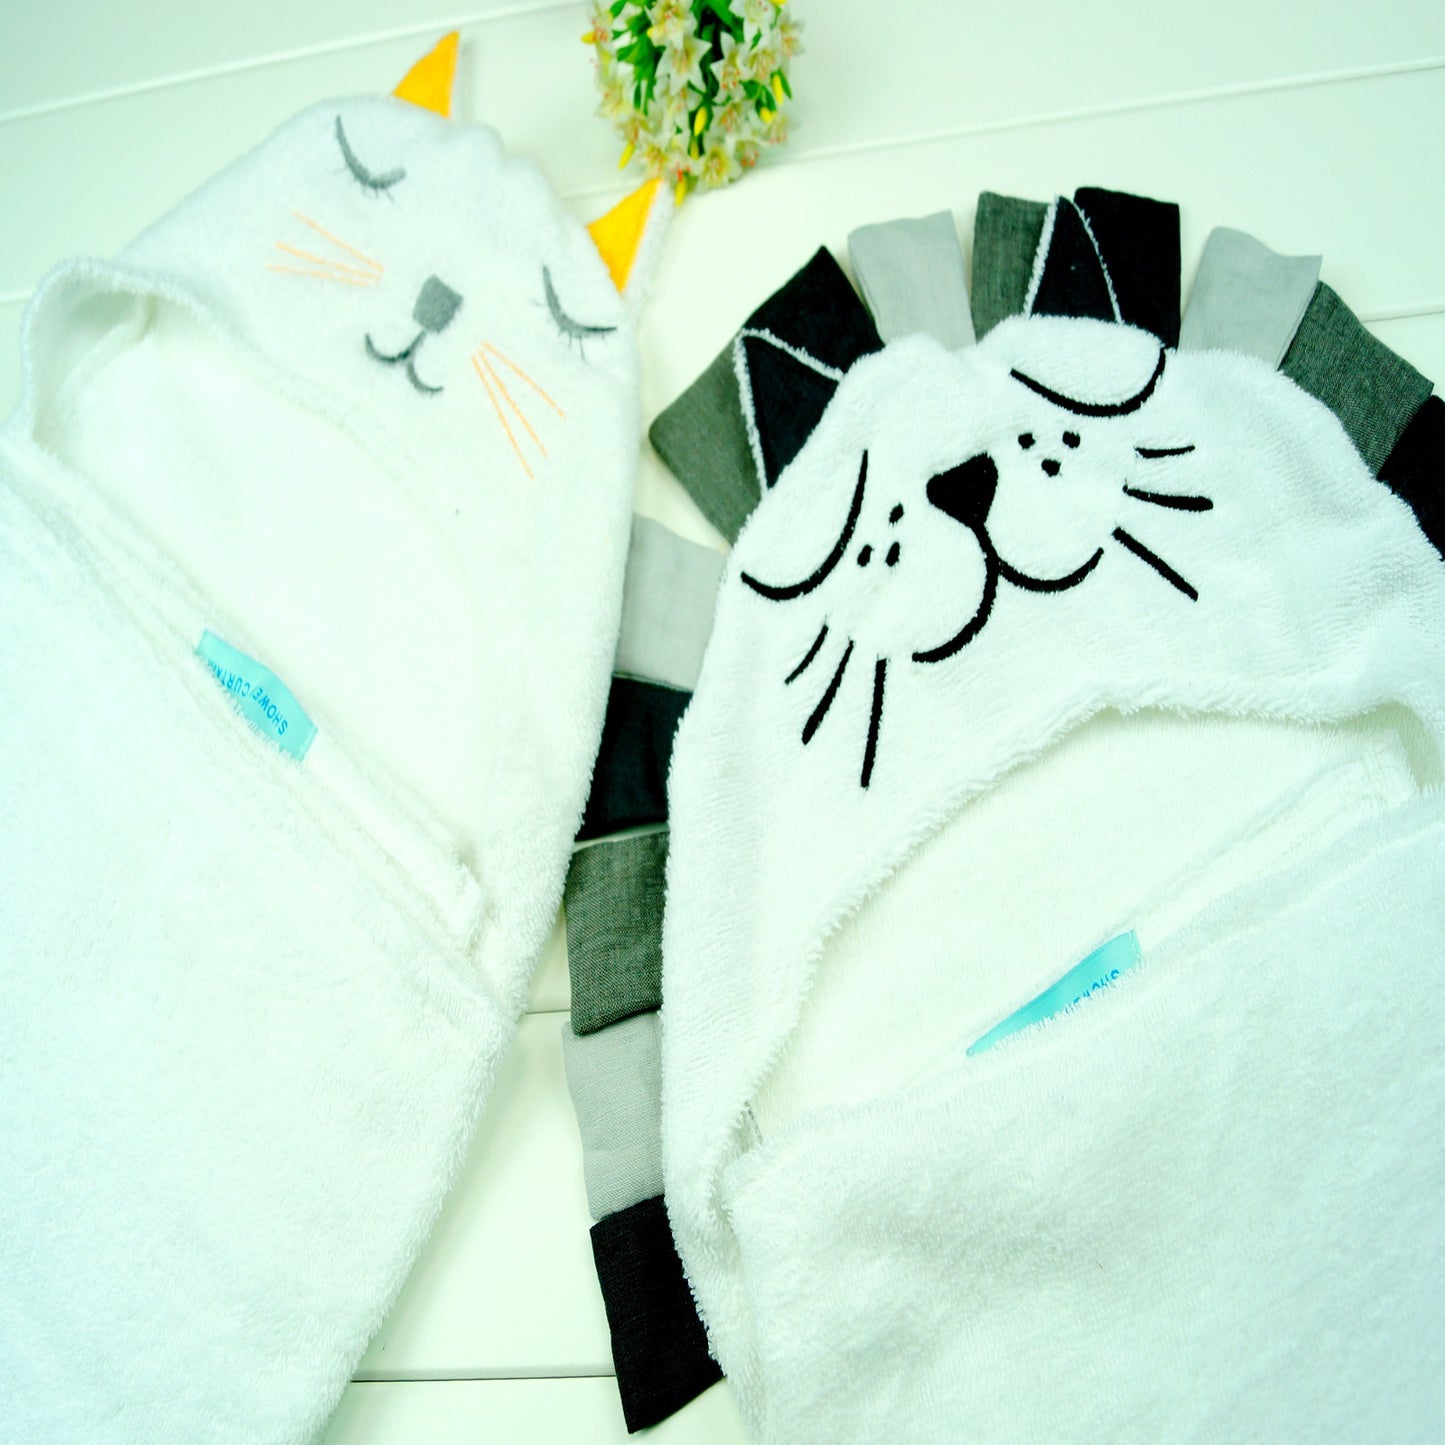 Baby Boys and Girls Lion Cat Shape Bath Towel